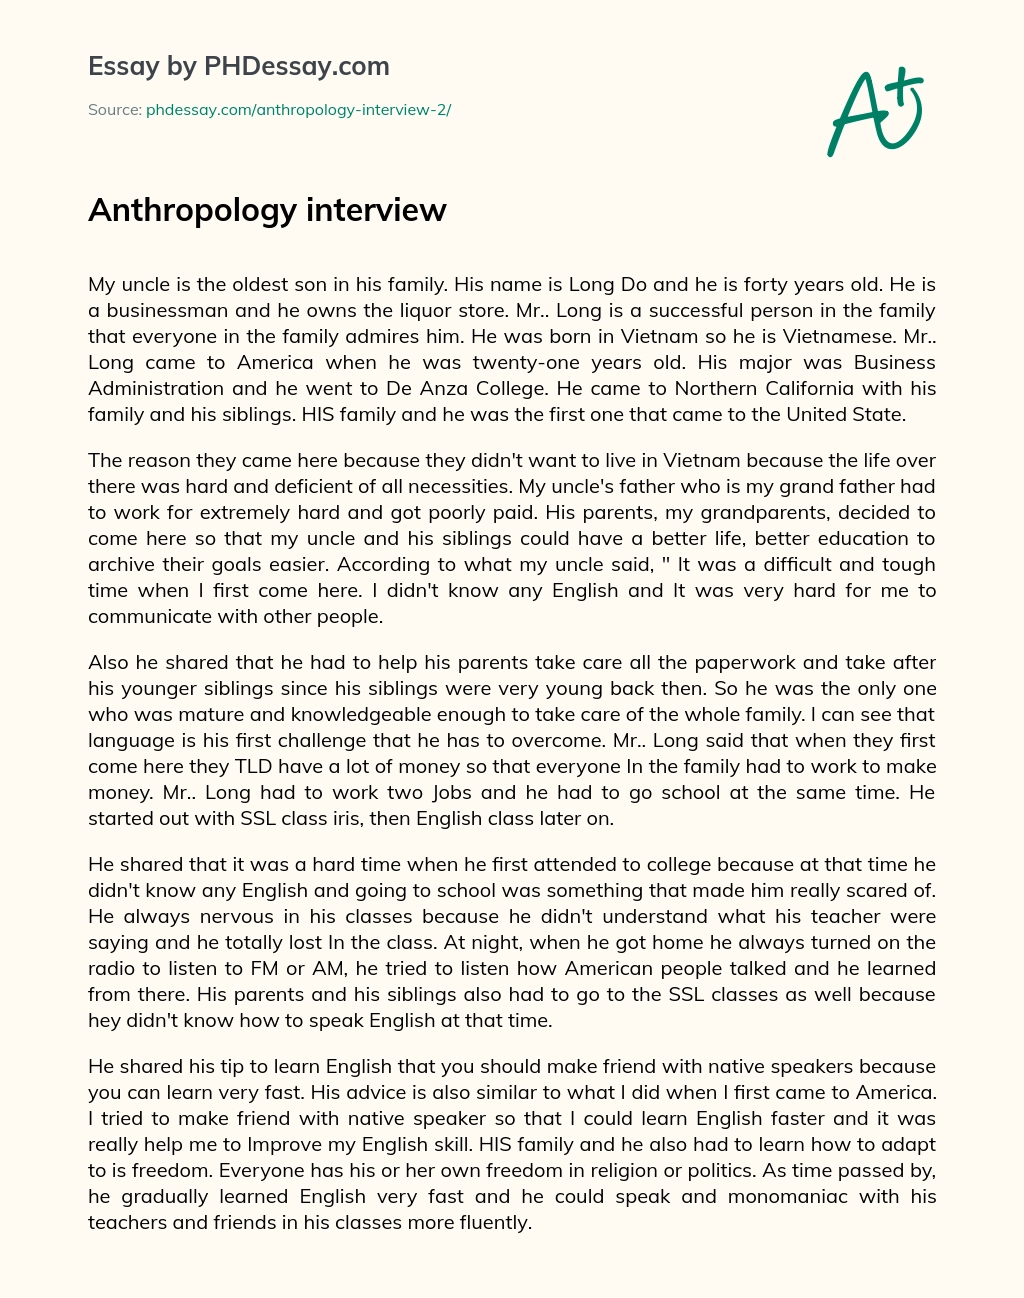 Anthropology interview essay